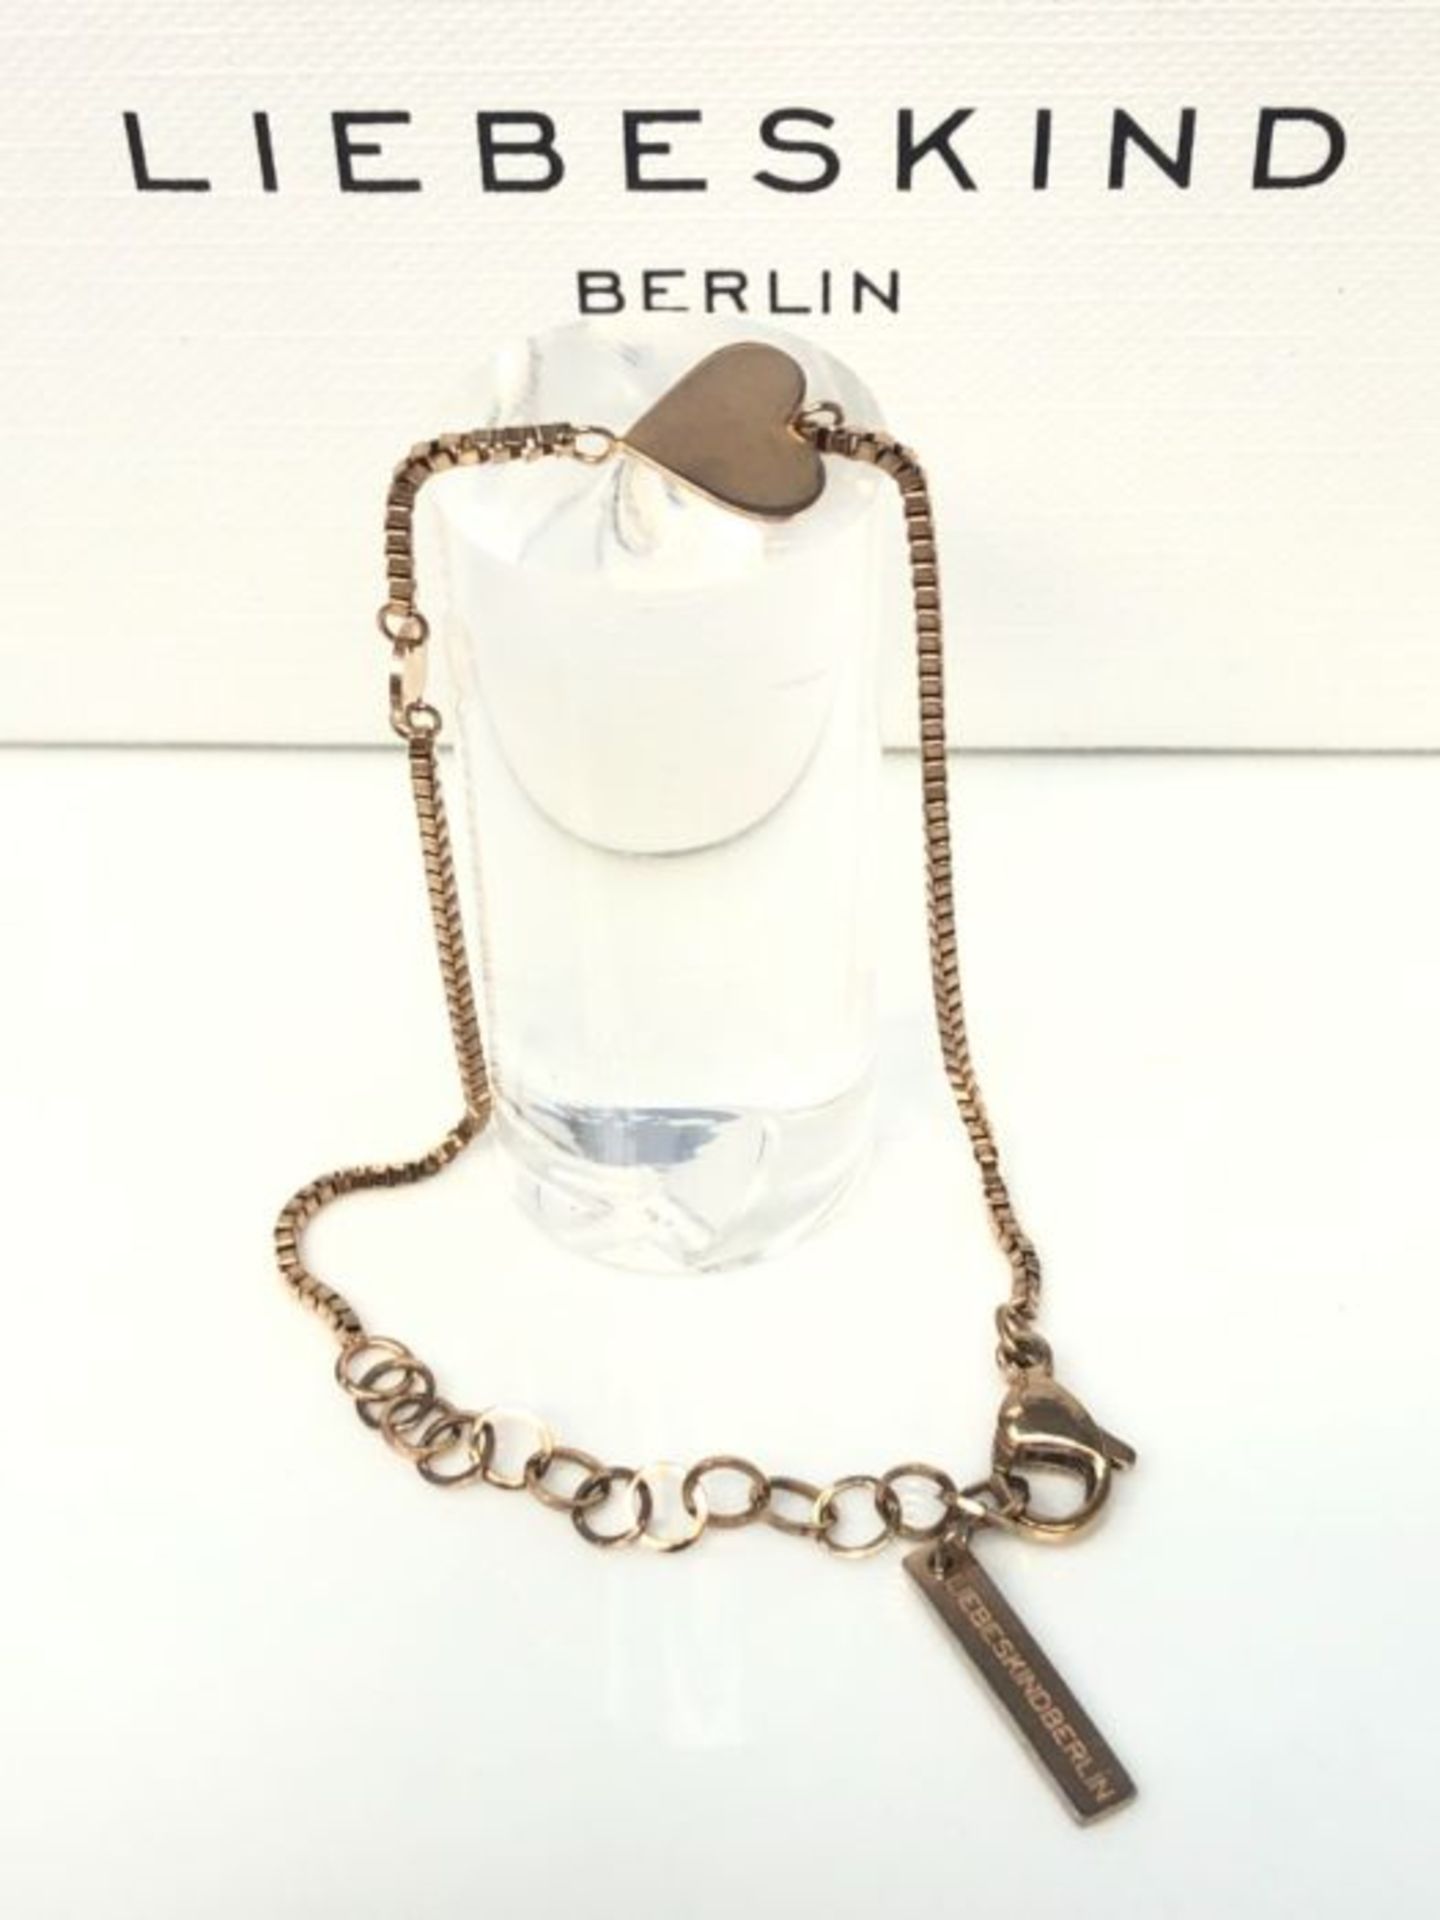 Liebeskind Berlin Bracelet, 20 centimeters, Stainless Steel, 0, - Image 2 of 3